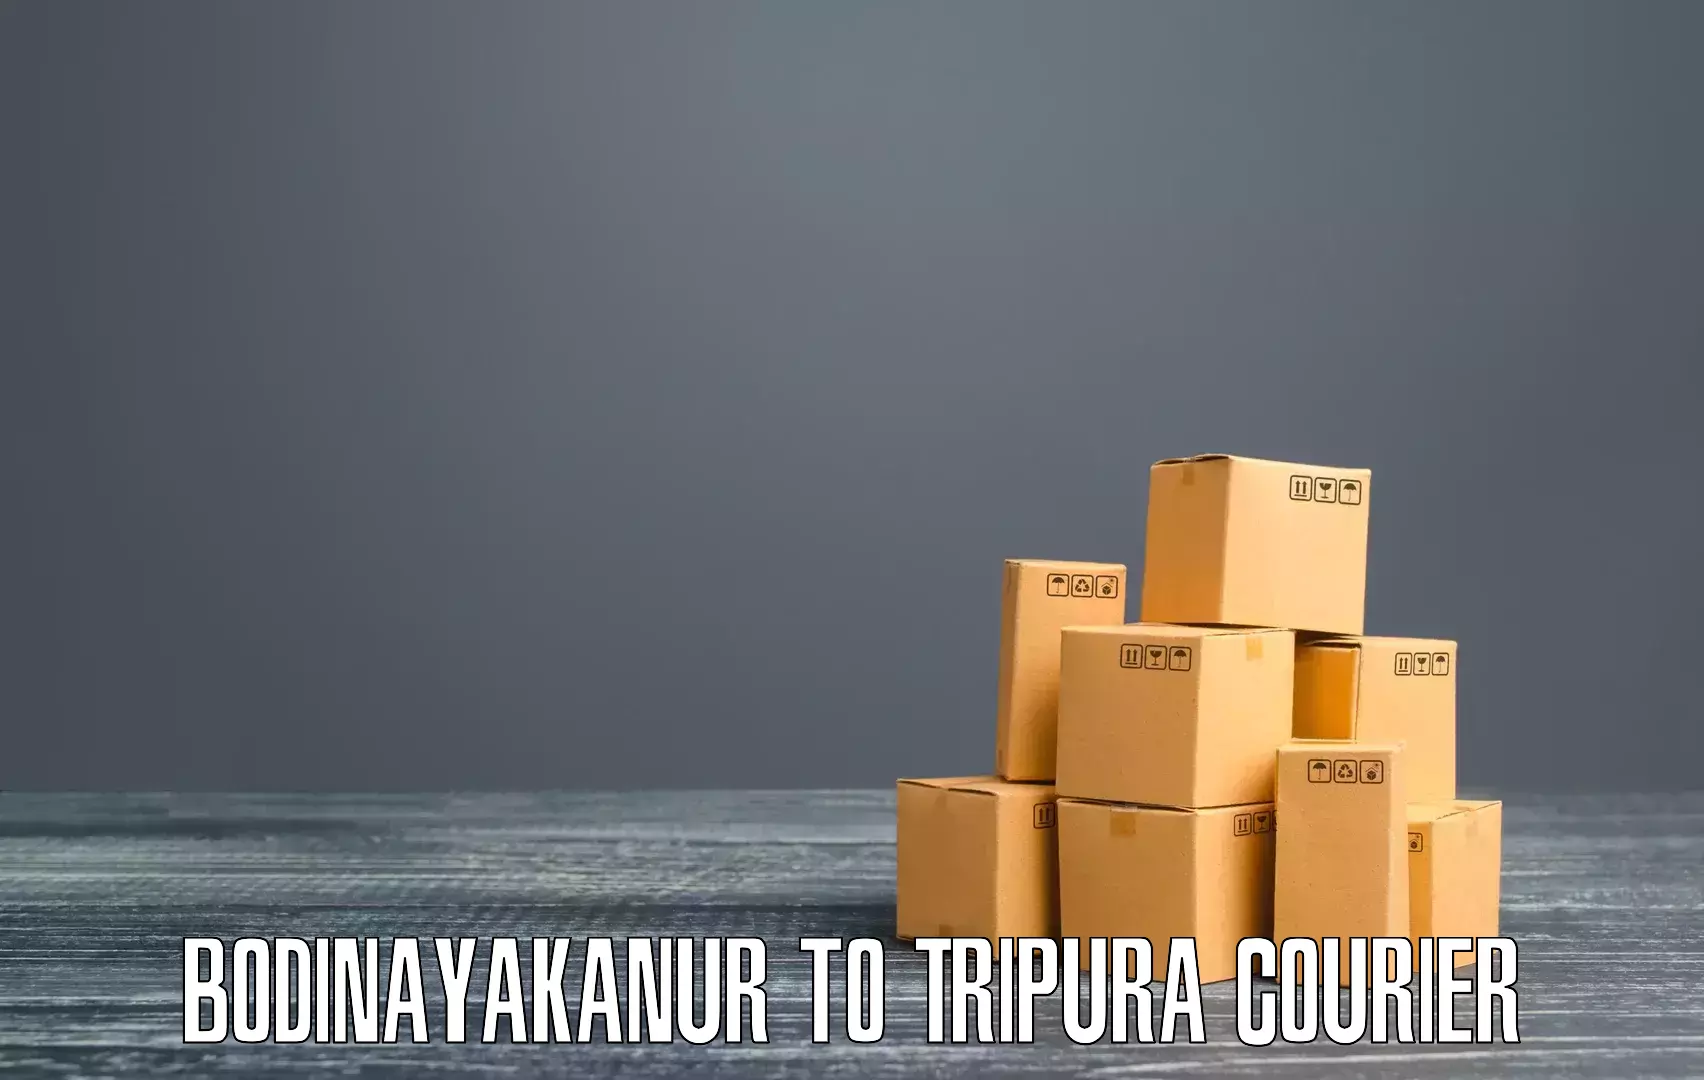 High-priority parcel service Bodinayakanur to Tripura